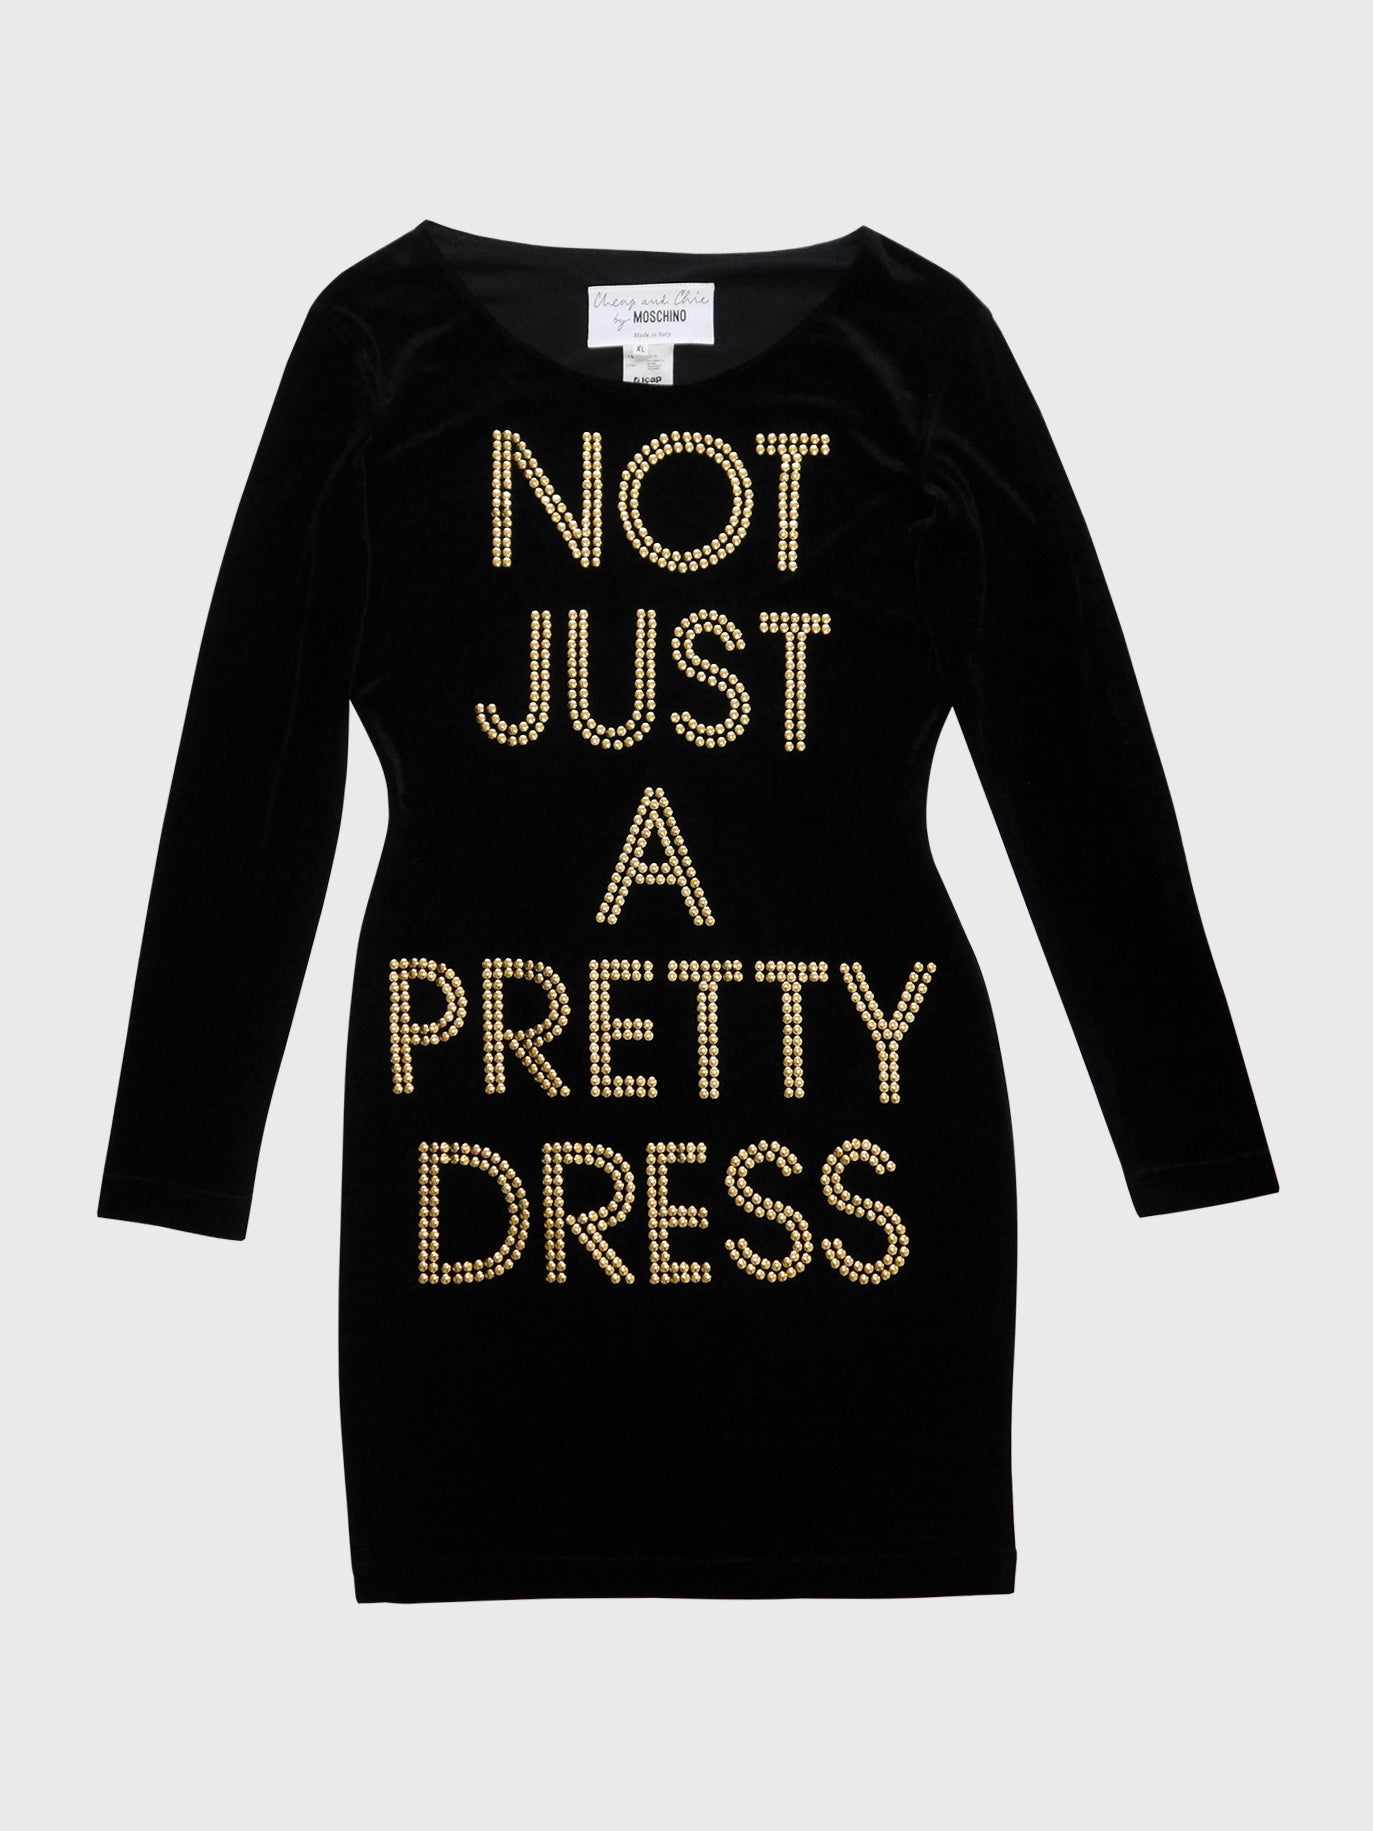 MOSCHINO 1990s Vintage "Not Just A Pretty Dress" Studded Stretch Velvet Dress Size L